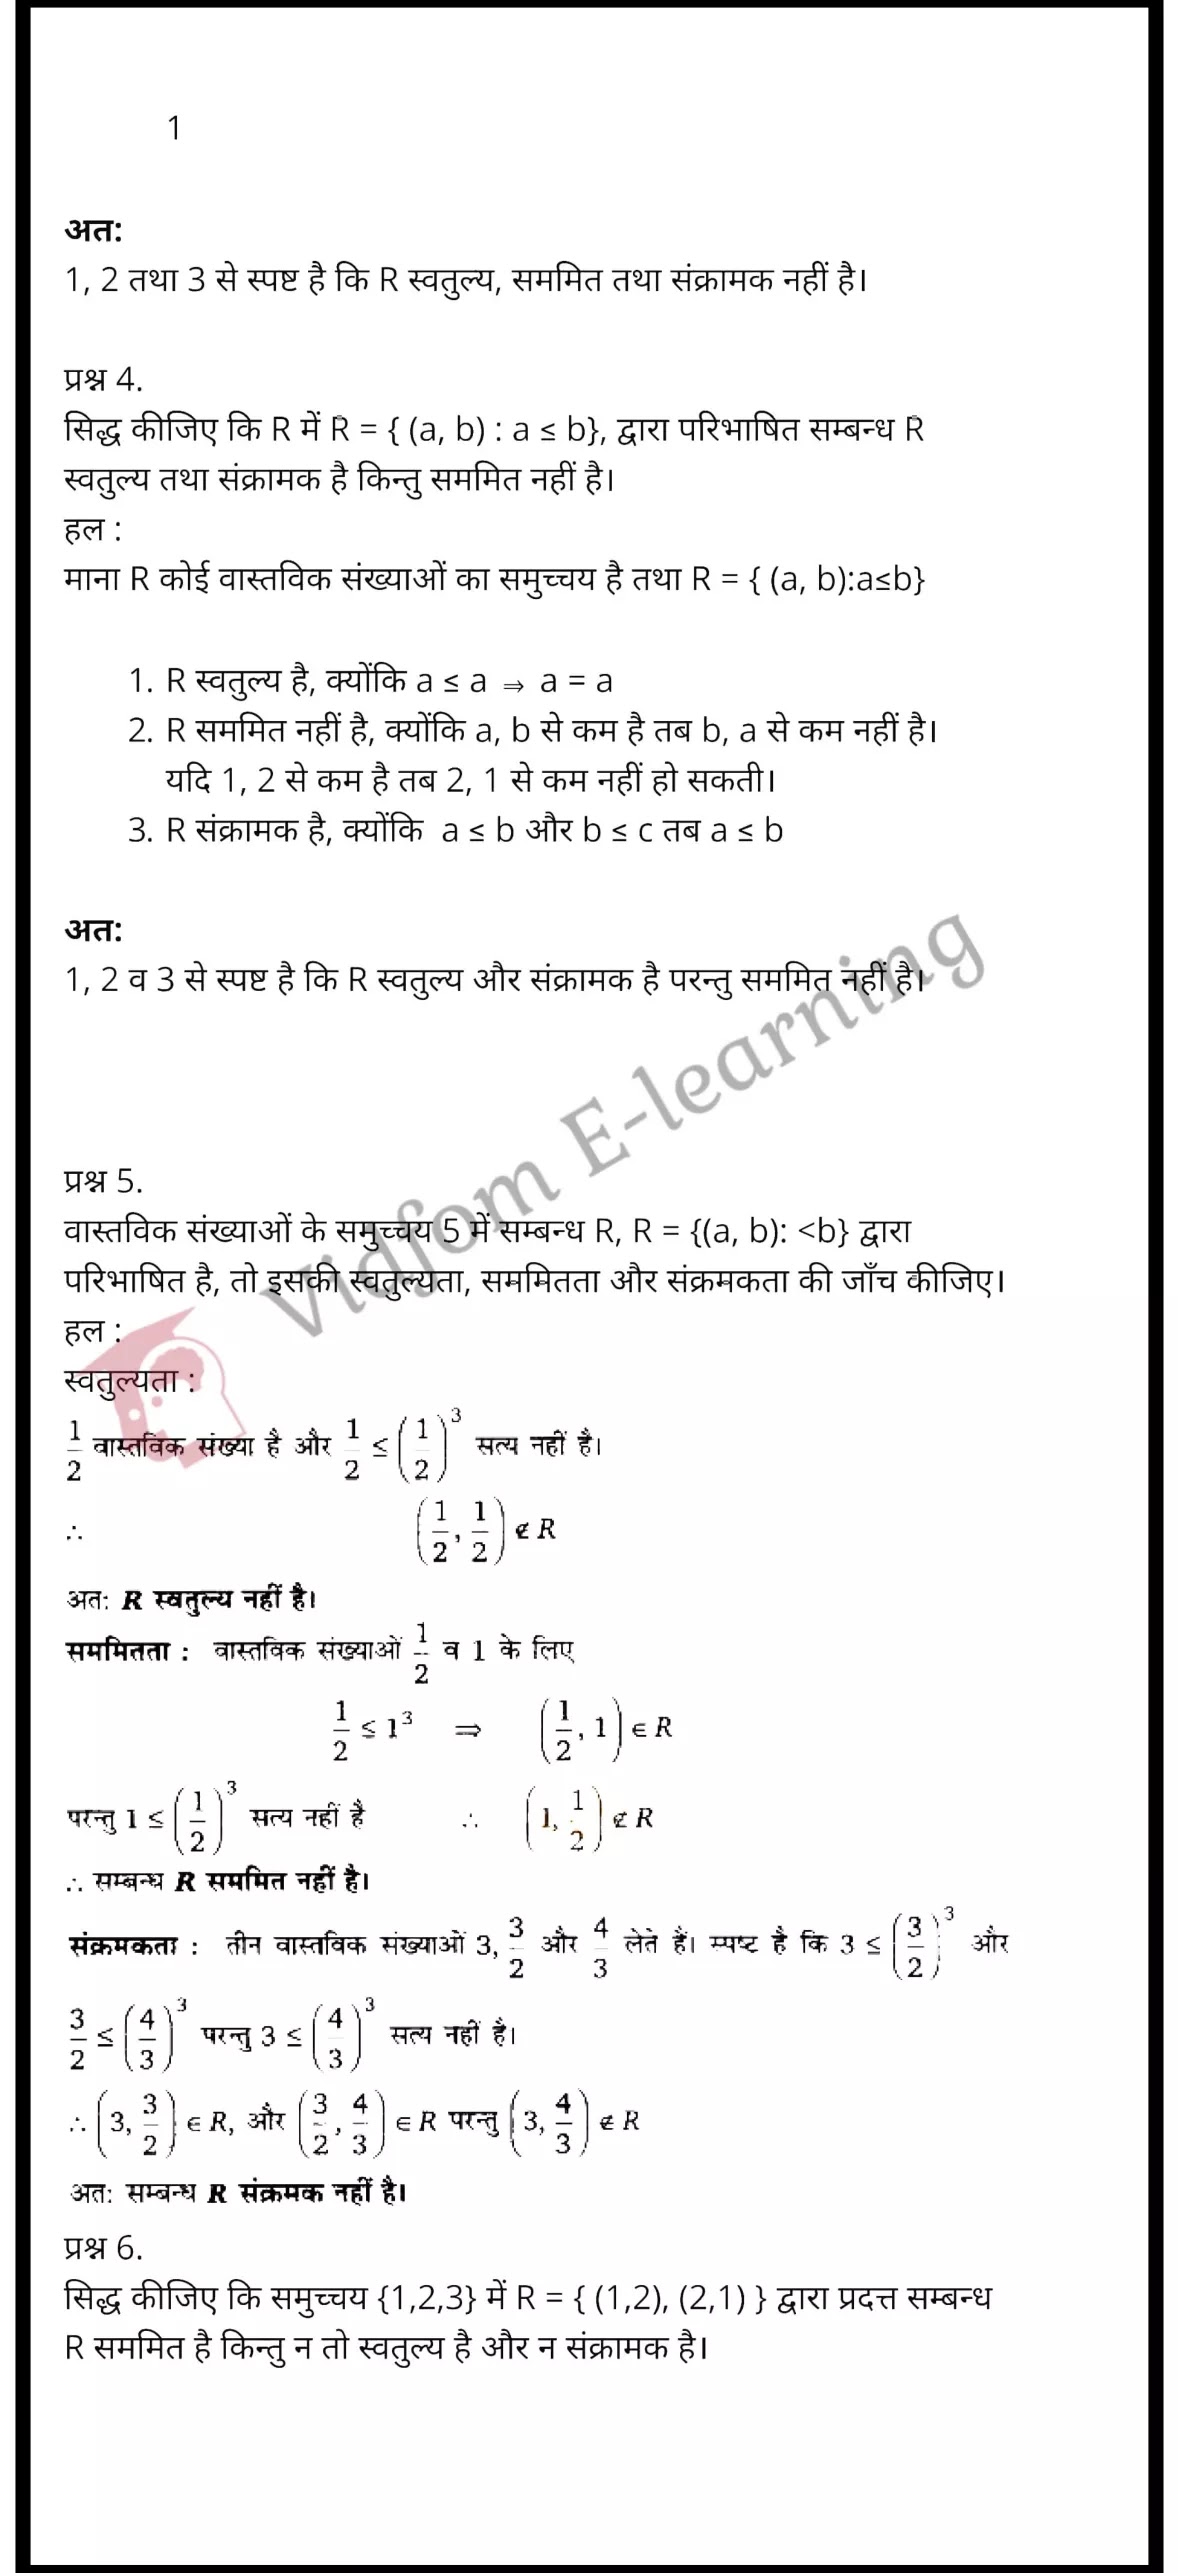 कक्षा 12 गणित  के नोट्स  हिंदी में एनसीईआरटी समाधान,     class 12 Maths Chapter 1,   class 12 Maths Chapter 1 ncert solutions in Hindi,   class 12 Maths Chapter 1 notes in hindi,   class 12 Maths Chapter 1 question answer,   class 12 Maths Chapter 1 notes,   class 12 Maths Chapter 1 class 12 Maths Chapter 1 in  hindi,    class 12 Maths Chapter 1 important questions in  hindi,   class 12 Maths Chapter 1 notes in hindi,    class 12 Maths Chapter 1 test,   class 12 Maths Chapter 1 pdf,   class 12 Maths Chapter 1 notes pdf,   class 12 Maths Chapter 1 exercise solutions,   class 12 Maths Chapter 1 notes study rankers,   class 12 Maths Chapter 1 notes,    class 12 Maths Chapter 1  class 12  notes pdf,   class 12 Maths Chapter 1 class 12  notes  ncert,   class 12 Maths Chapter 1 class 12 pdf,   class 12 Maths Chapter 1  book,   class 12 Maths Chapter 1 quiz class 12  ,    10  th class 12 Maths Chapter 1  book up board,   up board 10  th class 12 Maths Chapter 1 notes,  class 12 Maths,   class 12 Maths ncert solutions in Hindi,   class 12 Maths notes in hindi,   class 12 Maths question answer,   class 12 Maths notes,  class 12 Maths class 12 Maths Chapter 1 in  hindi,    class 12 Maths important questions in  hindi,   class 12 Maths notes in hindi,    class 12 Maths test,  class 12 Maths class 12 Maths Chapter 1 pdf,   class 12 Maths notes pdf,   class 12 Maths exercise solutions,   class 12 Maths,  class 12 Maths notes study rankers,   class 12 Maths notes,  class 12 Maths notes,   class 12 Maths  class 12  notes pdf,   class 12 Maths class 12  notes  ncert,   class 12 Maths class 12 pdf,   class 12 Maths  book,  class 12 Maths quiz class 12  ,  10  th class 12 Maths    book up board,    up board 10  th class 12 Maths notes,      कक्षा 12 गणित अध्याय 1 ,  कक्षा 12 गणित, कक्षा 12 गणित अध्याय 1  के नोट्स हिंदी में,  कक्षा 12 का हिंदी अध्याय 1 का प्रश्न उत्तर,  कक्षा 12 गणित अध्याय 1  के नोट्स,  10 कक्षा गणित  हिंदी में, कक्षा 12 गणित अध्याय 1  हिंदी में,  कक्षा 12 गणित अध्याय 1  महत्वपूर्ण प्रश्न हिंदी में, कक्षा 12   हिंदी के नोट्स  हिंदी में, गणित हिंदी में  कक्षा 12 नोट्स pdf,    गणित हिंदी में  कक्षा 12 नोट्स 2021 ncert,   गणित हिंदी  कक्षा 12 pdf,   गणित हिंदी में  पुस्तक,   गणित हिंदी में की बुक,   गणित हिंदी में  प्रश्नोत्तरी class 12 ,  बिहार बोर्ड   पुस्तक 12वीं हिंदी नोट्स,    गणित कक्षा 12 नोट्स 2021 ncert,   गणित  कक्षा 12 pdf,   गणित  पुस्तक,   गणित  प्रश्नोत्तरी class 12, कक्षा 12 गणित,  कक्षा 12 गणित  के नोट्स हिंदी में,  कक्षा 12 का हिंदी का प्रश्न उत्तर,  कक्षा 12 गणित  के नोट्स,  10 कक्षा हिंदी 2021  हिंदी में, कक्षा 12 गणित  हिंदी में,  कक्षा 12 गणित  महत्वपूर्ण प्रश्न हिंदी में, कक्षा 12 गणित  नोट्स  हिंदी में,